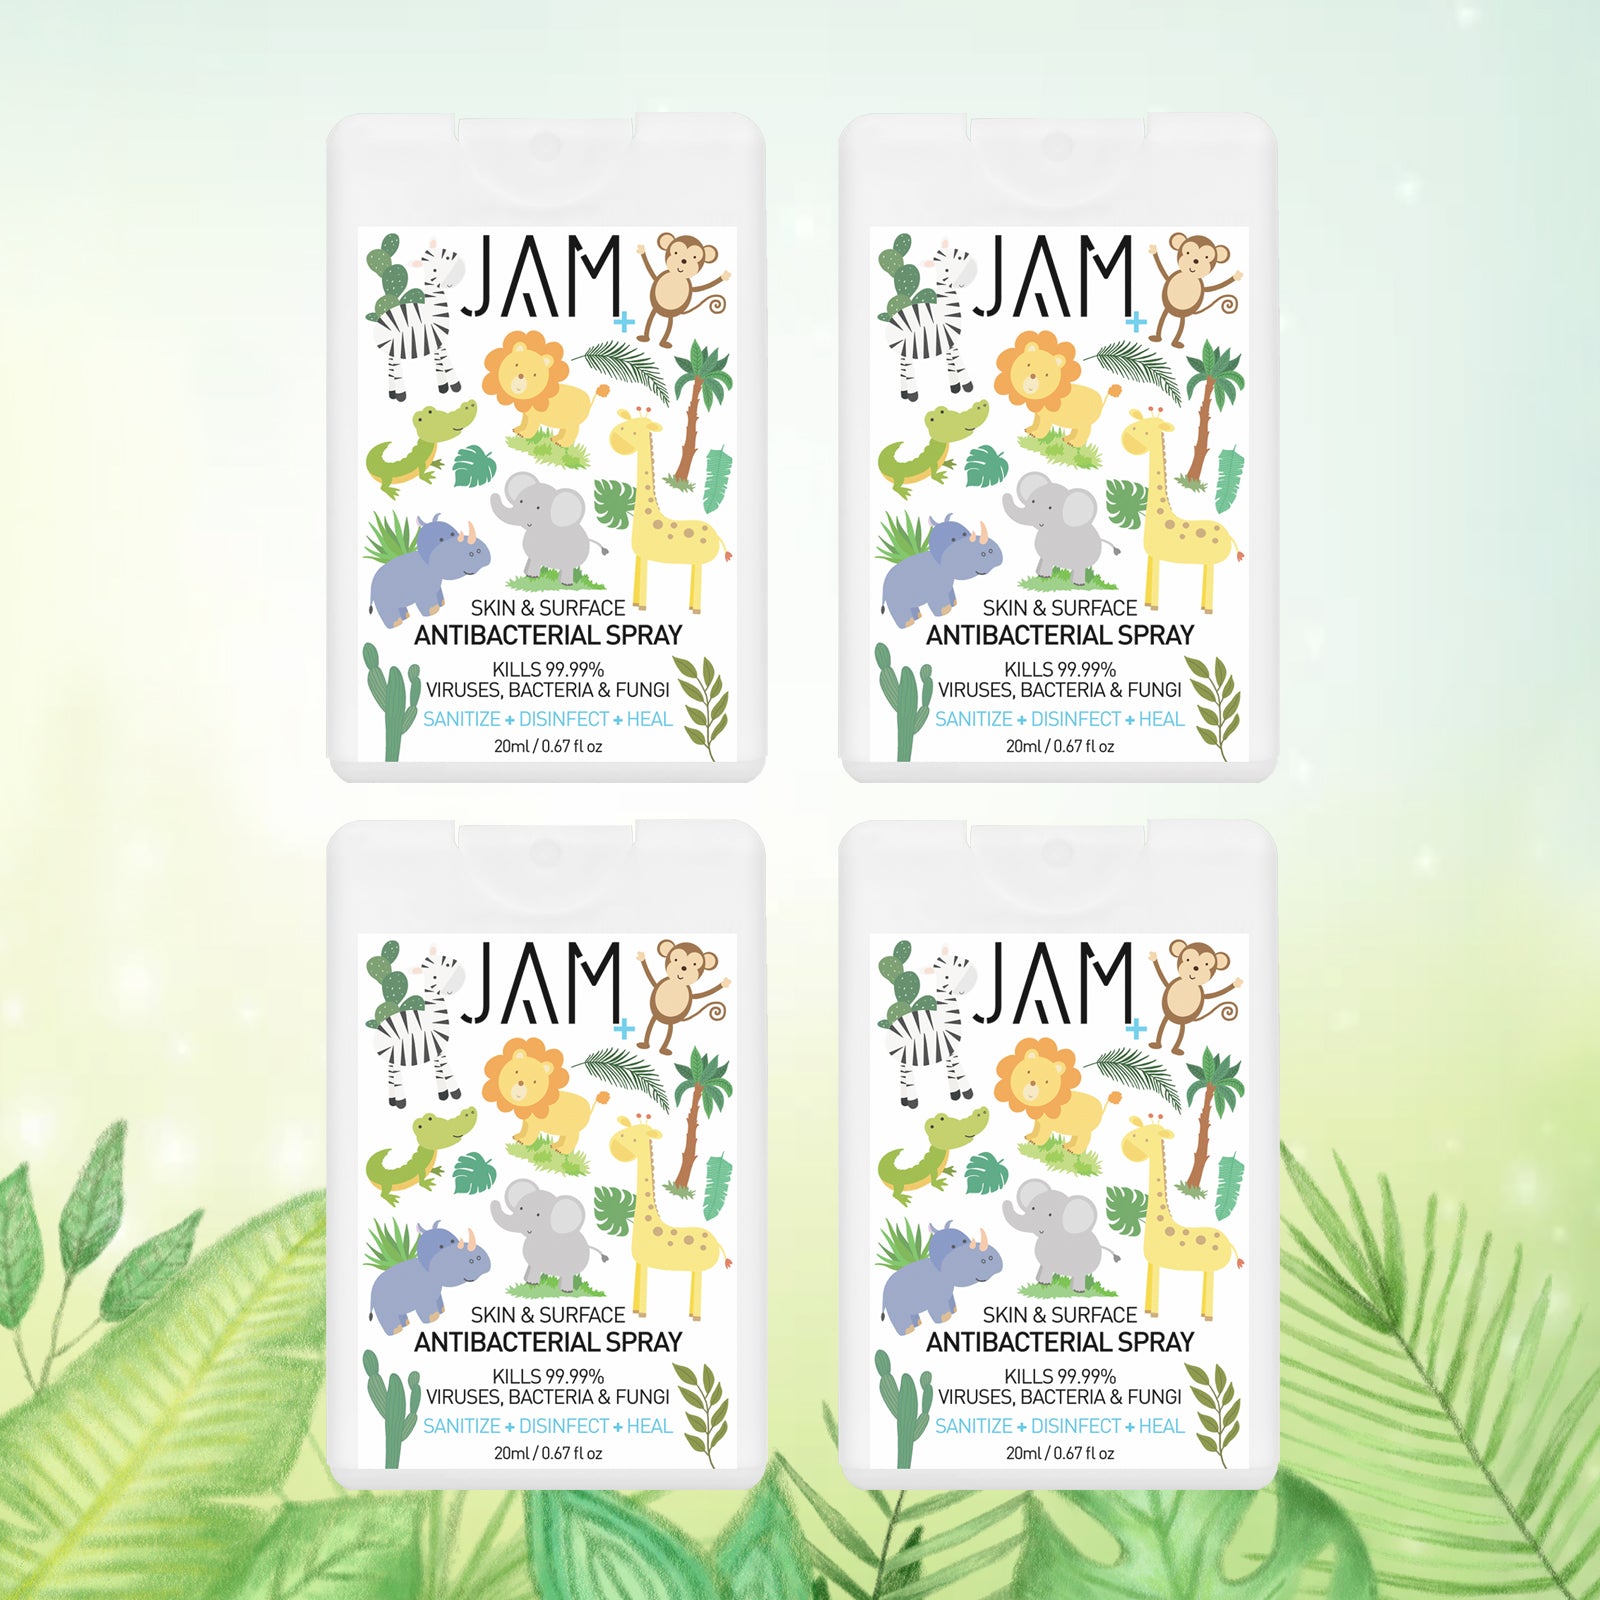 Special Edition Skin & Surface Antibacterial Pocket Spray Bundle (20mlx4) (Animal Kingdom)